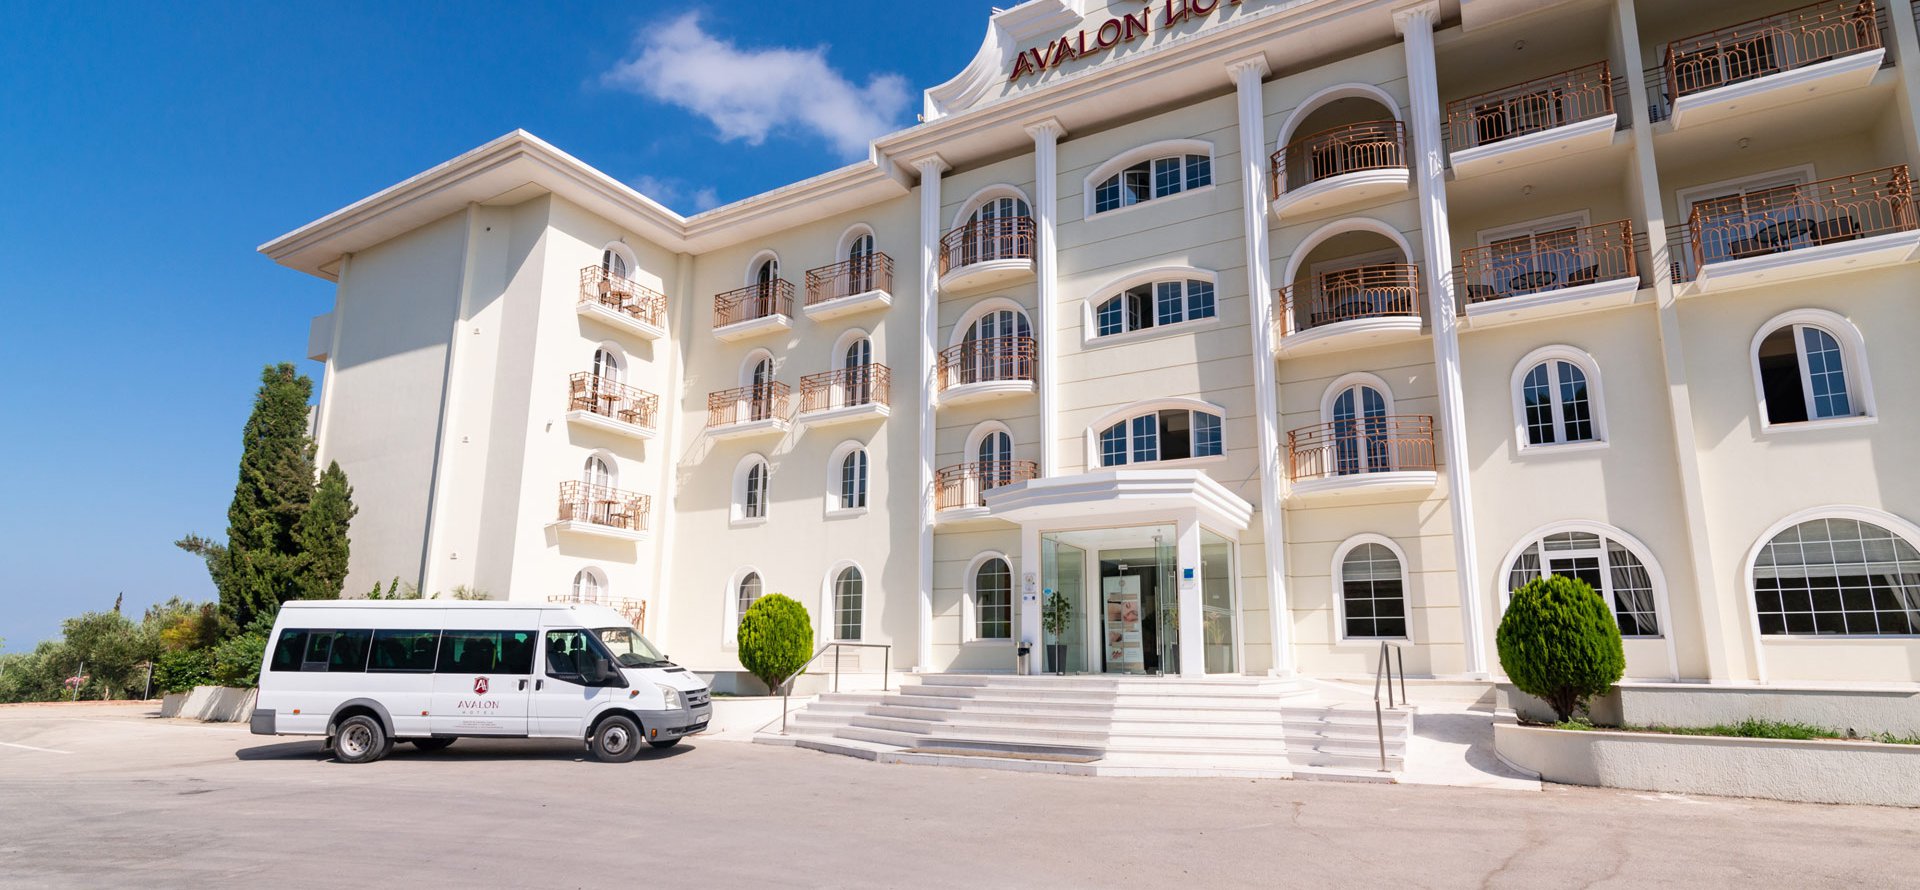 The entrance of Avalon Palace Hotel